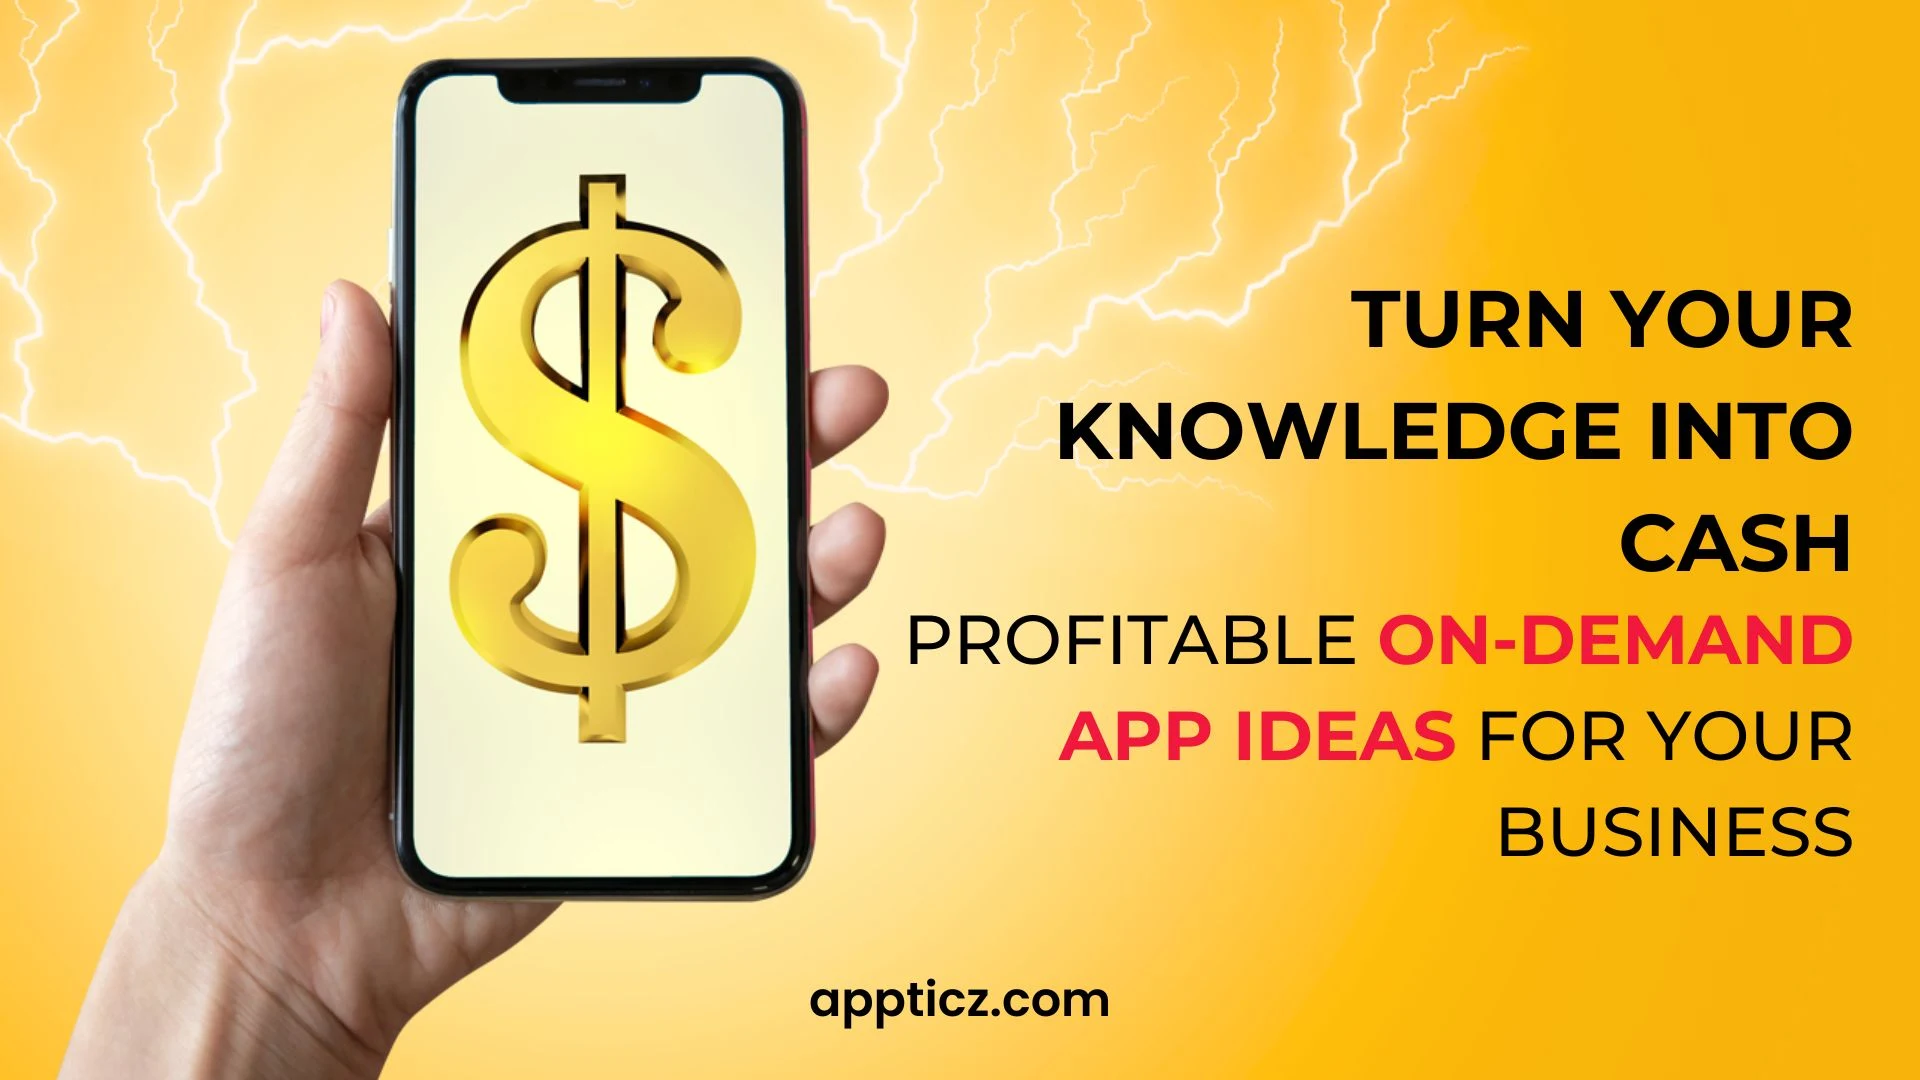 Cash Profitable On-demand App Ideas